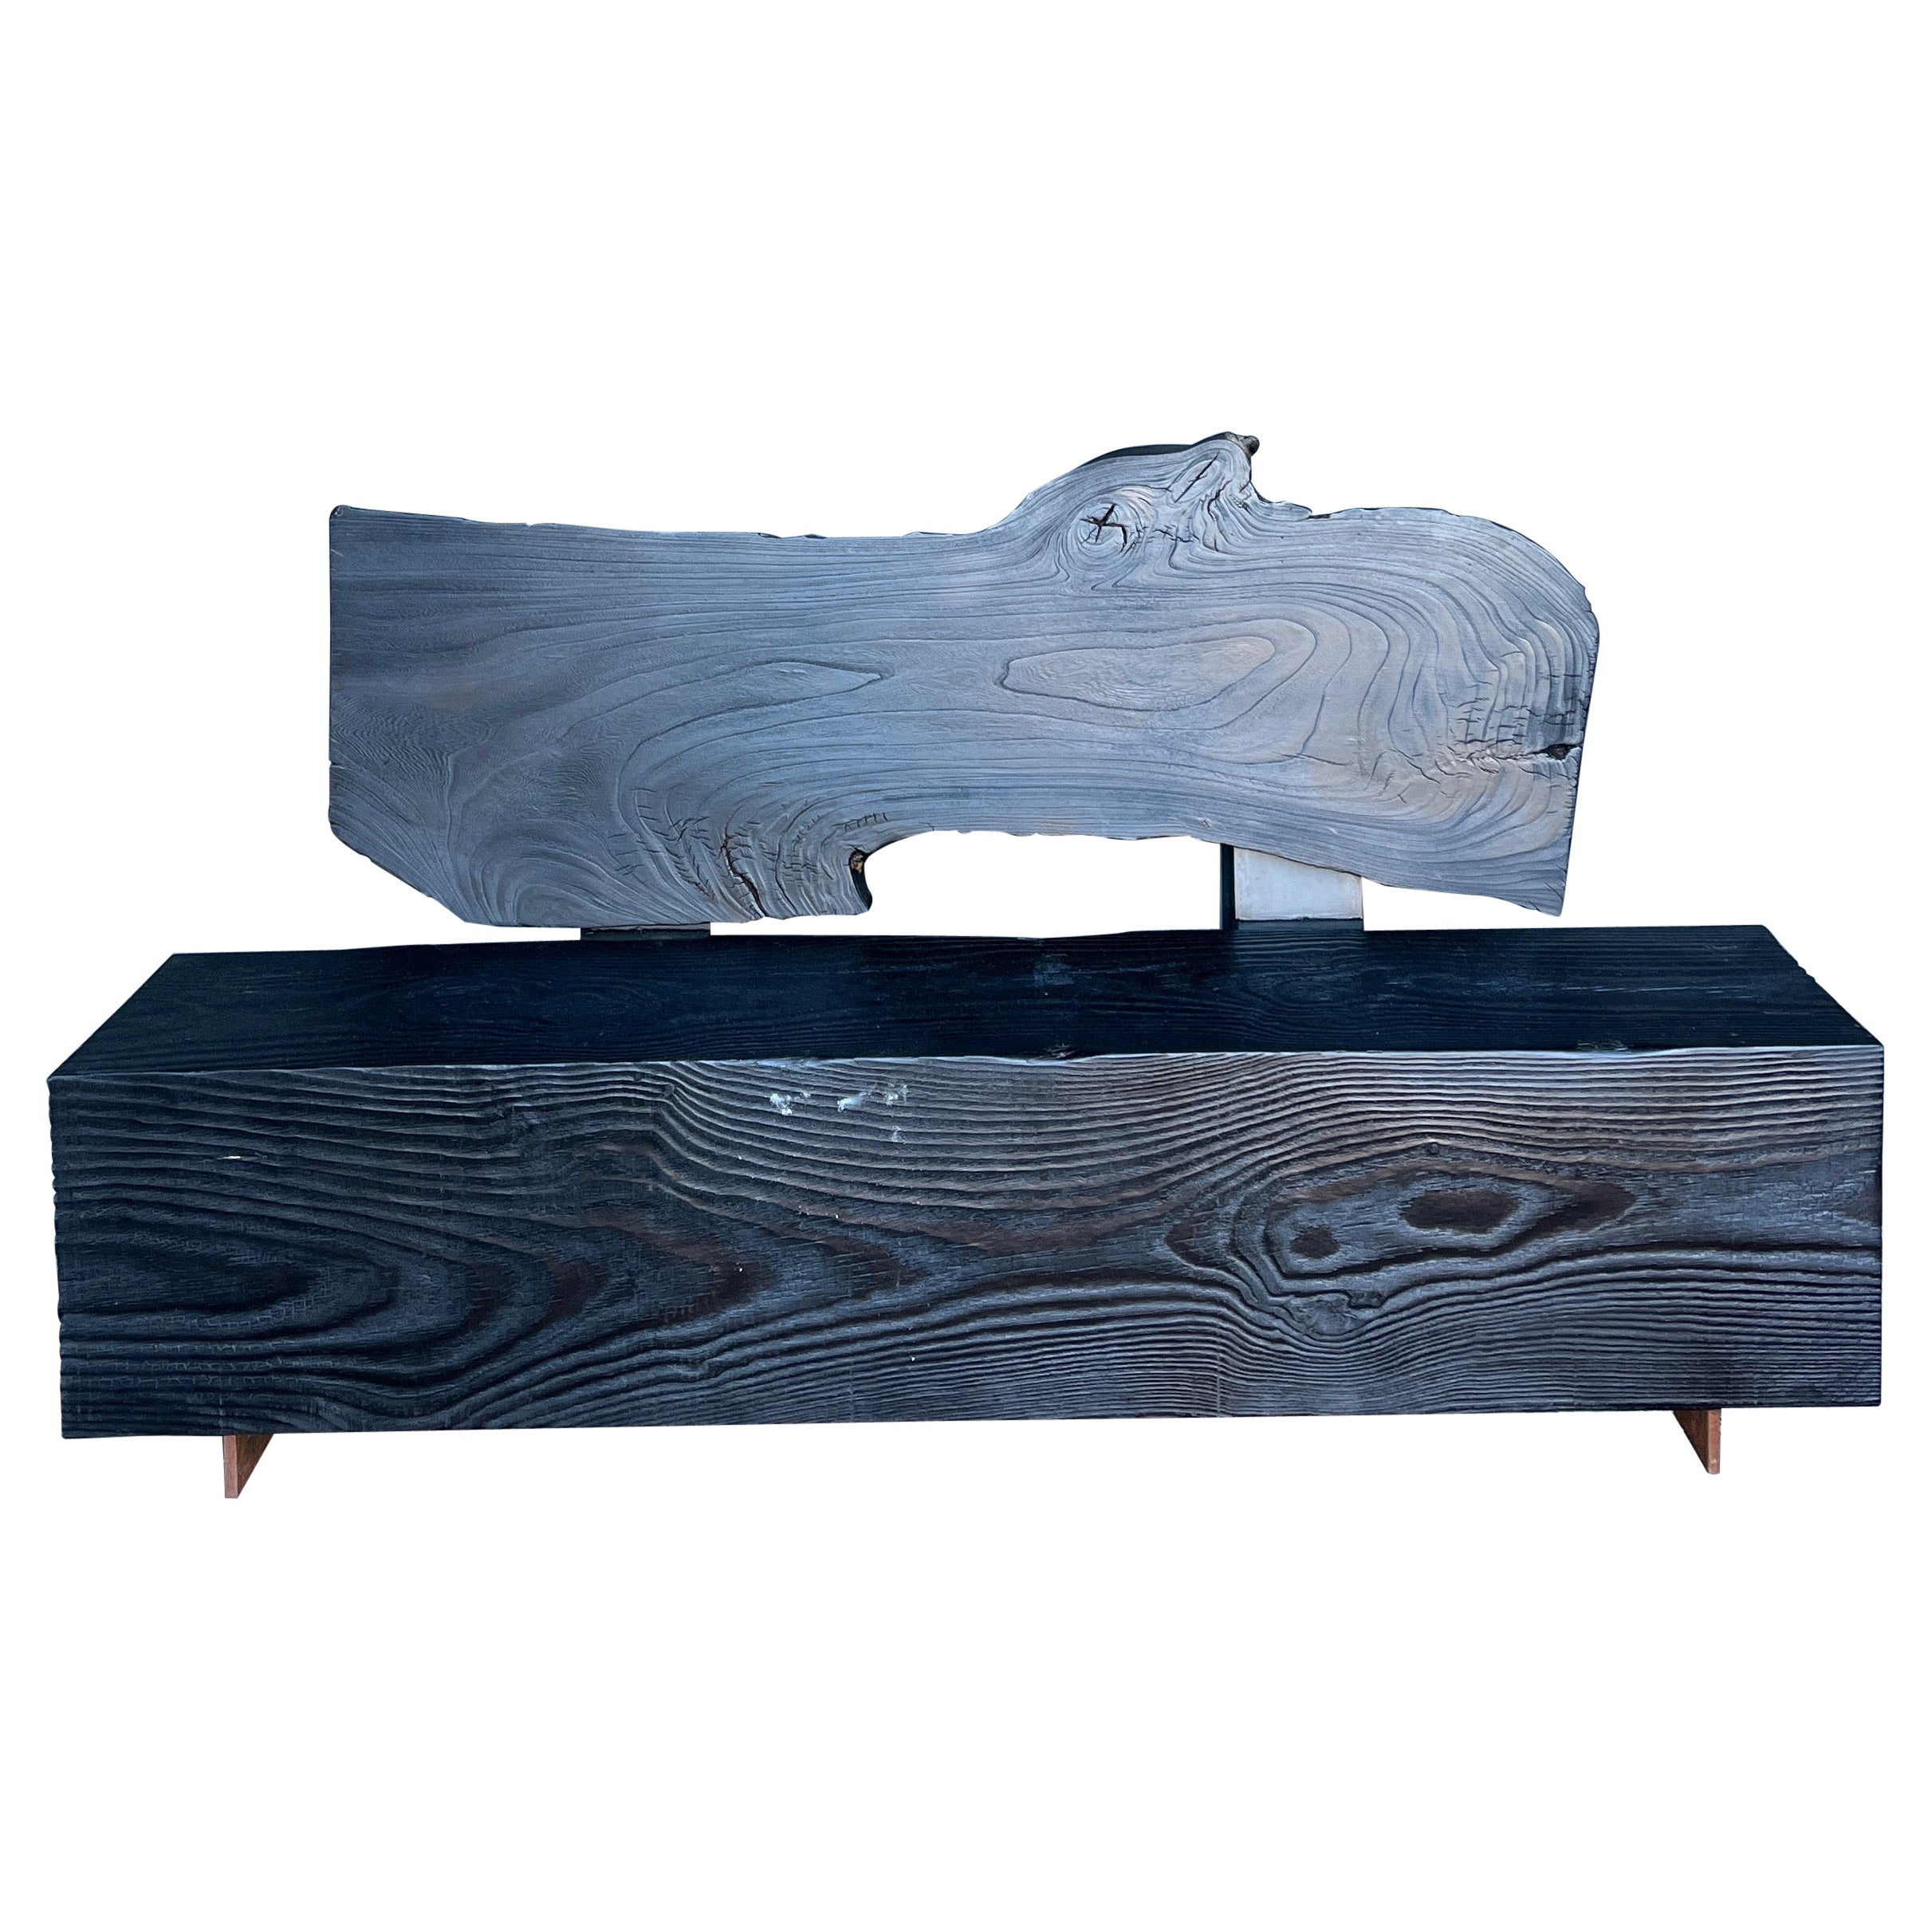 Shou Sugi Ban Wood Bench Pine Corten Steel with Live Edge Back by Alabama Sawyer For Sale